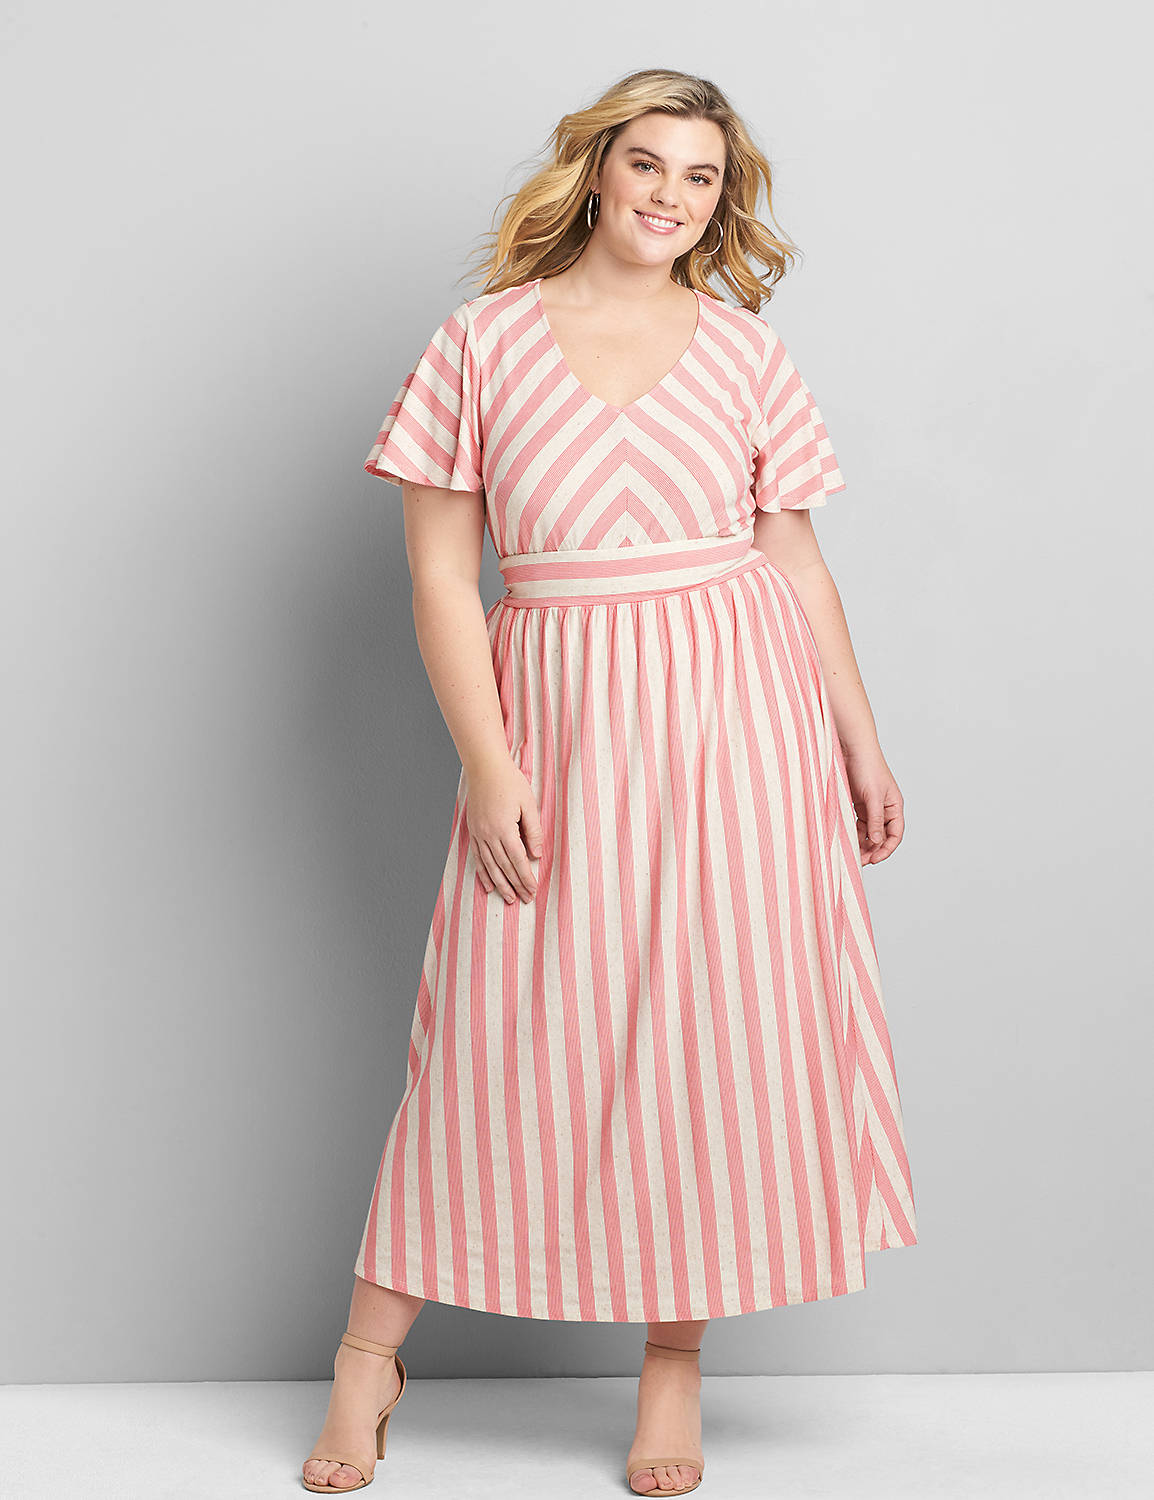 Short-Sleeve Chevron Stripe Maxi Dress Product Image 1